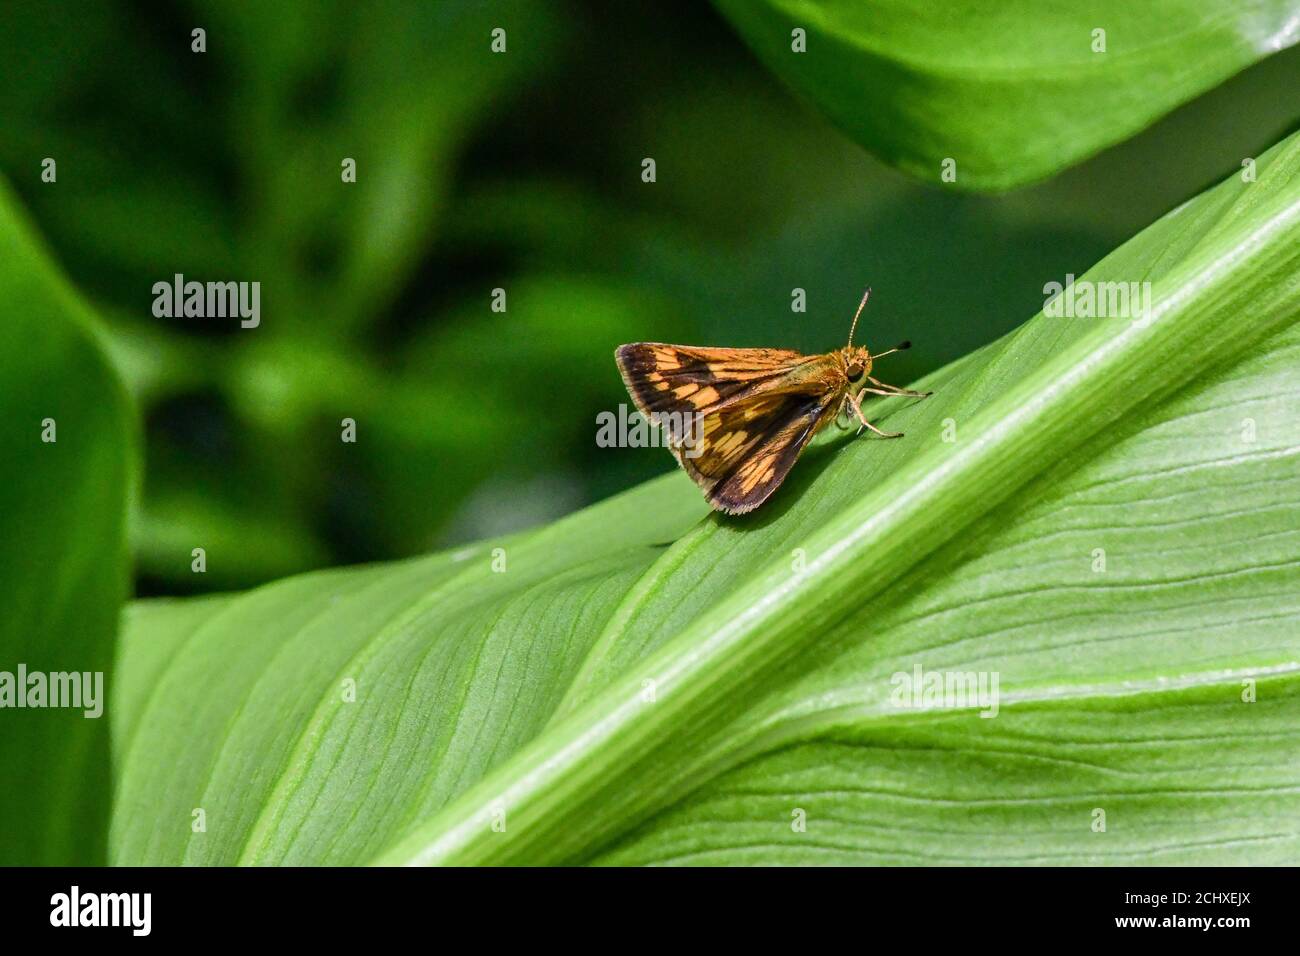 Skipper Schmetterling - Hesperiidae - auf grünem Blatt - Calla lilienblatt mit Tagschmetterling - braune Schmetterlingsantenne Stockfoto